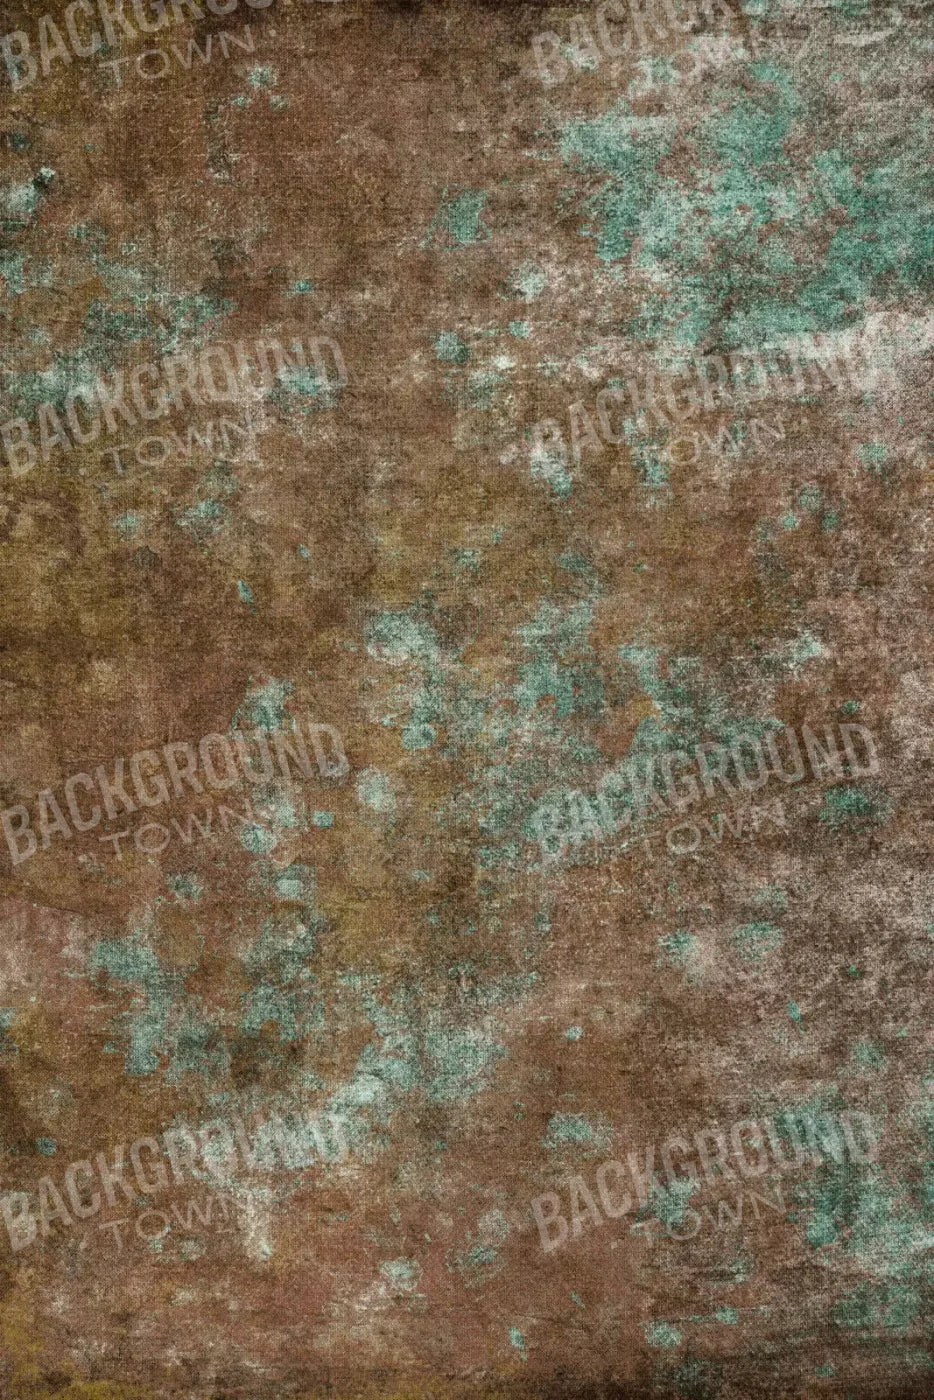 Elmore 4X5 Rubbermat Floor ( 48 X 60 Inch ) Backdrop